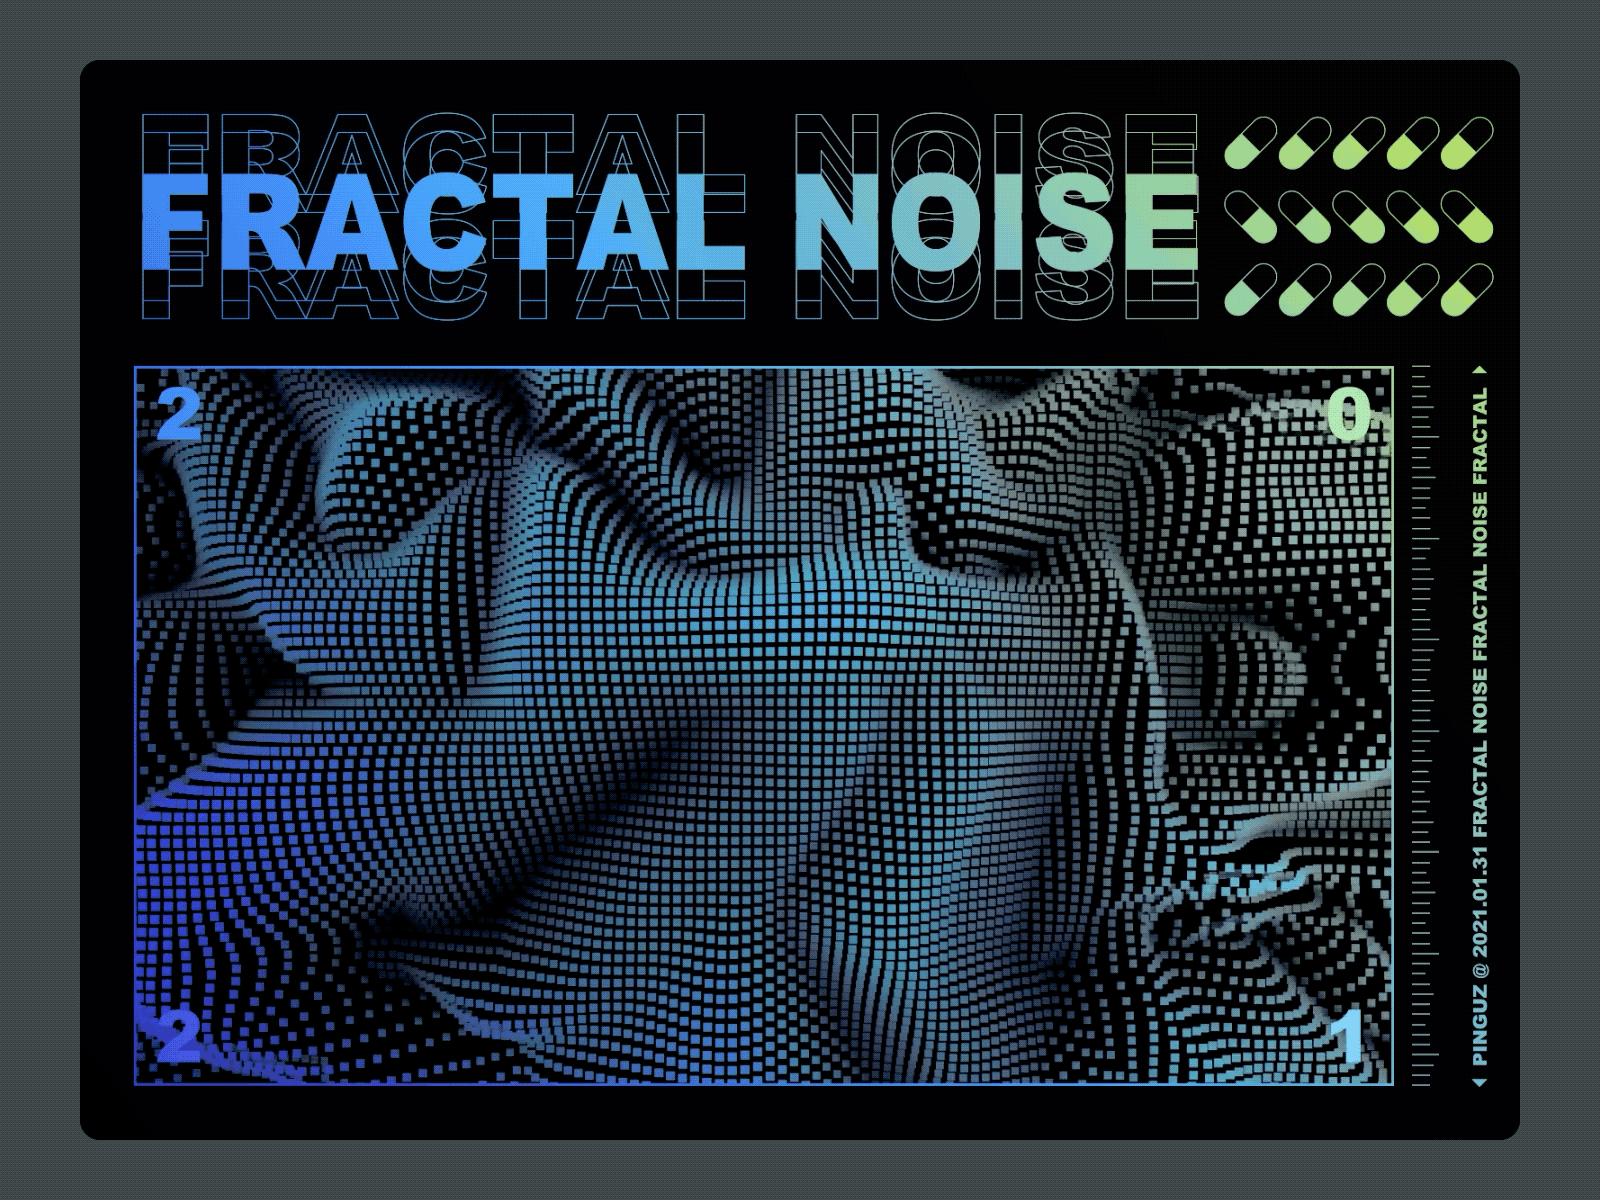 Fractal noise ae dynamic fractal noise